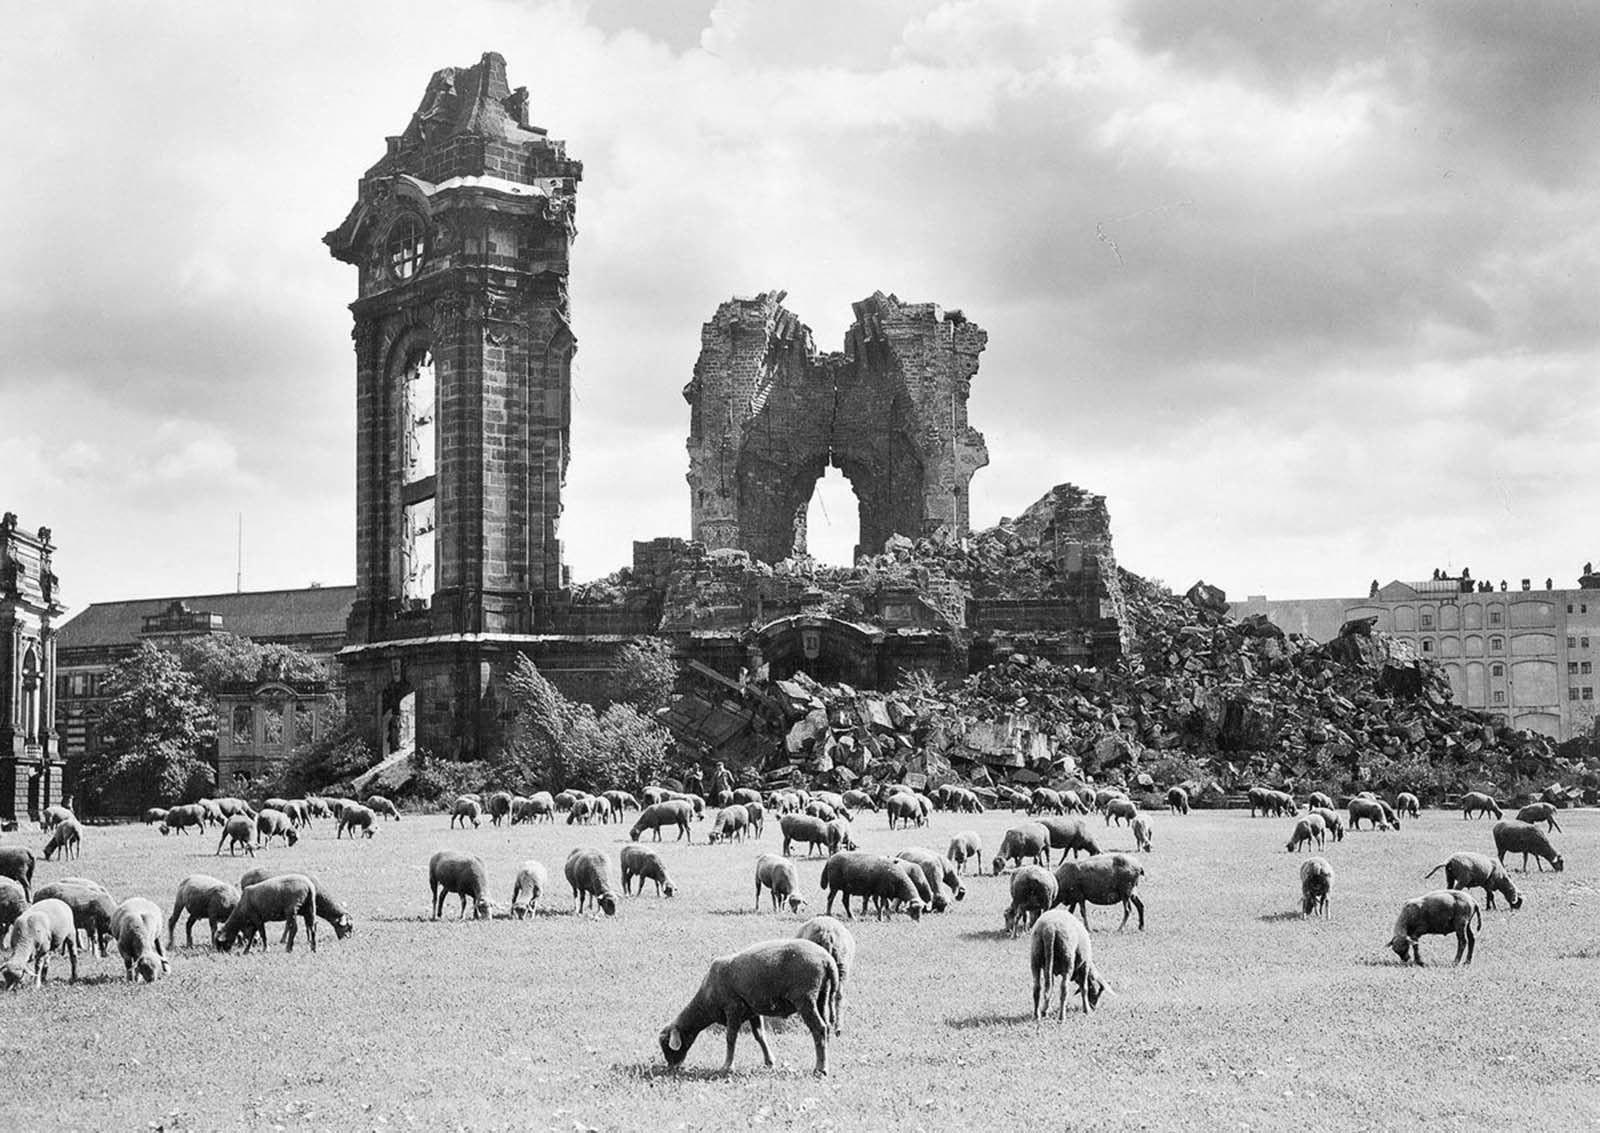 Sheep graze near the ruins of the Frauenkirche, 1957.